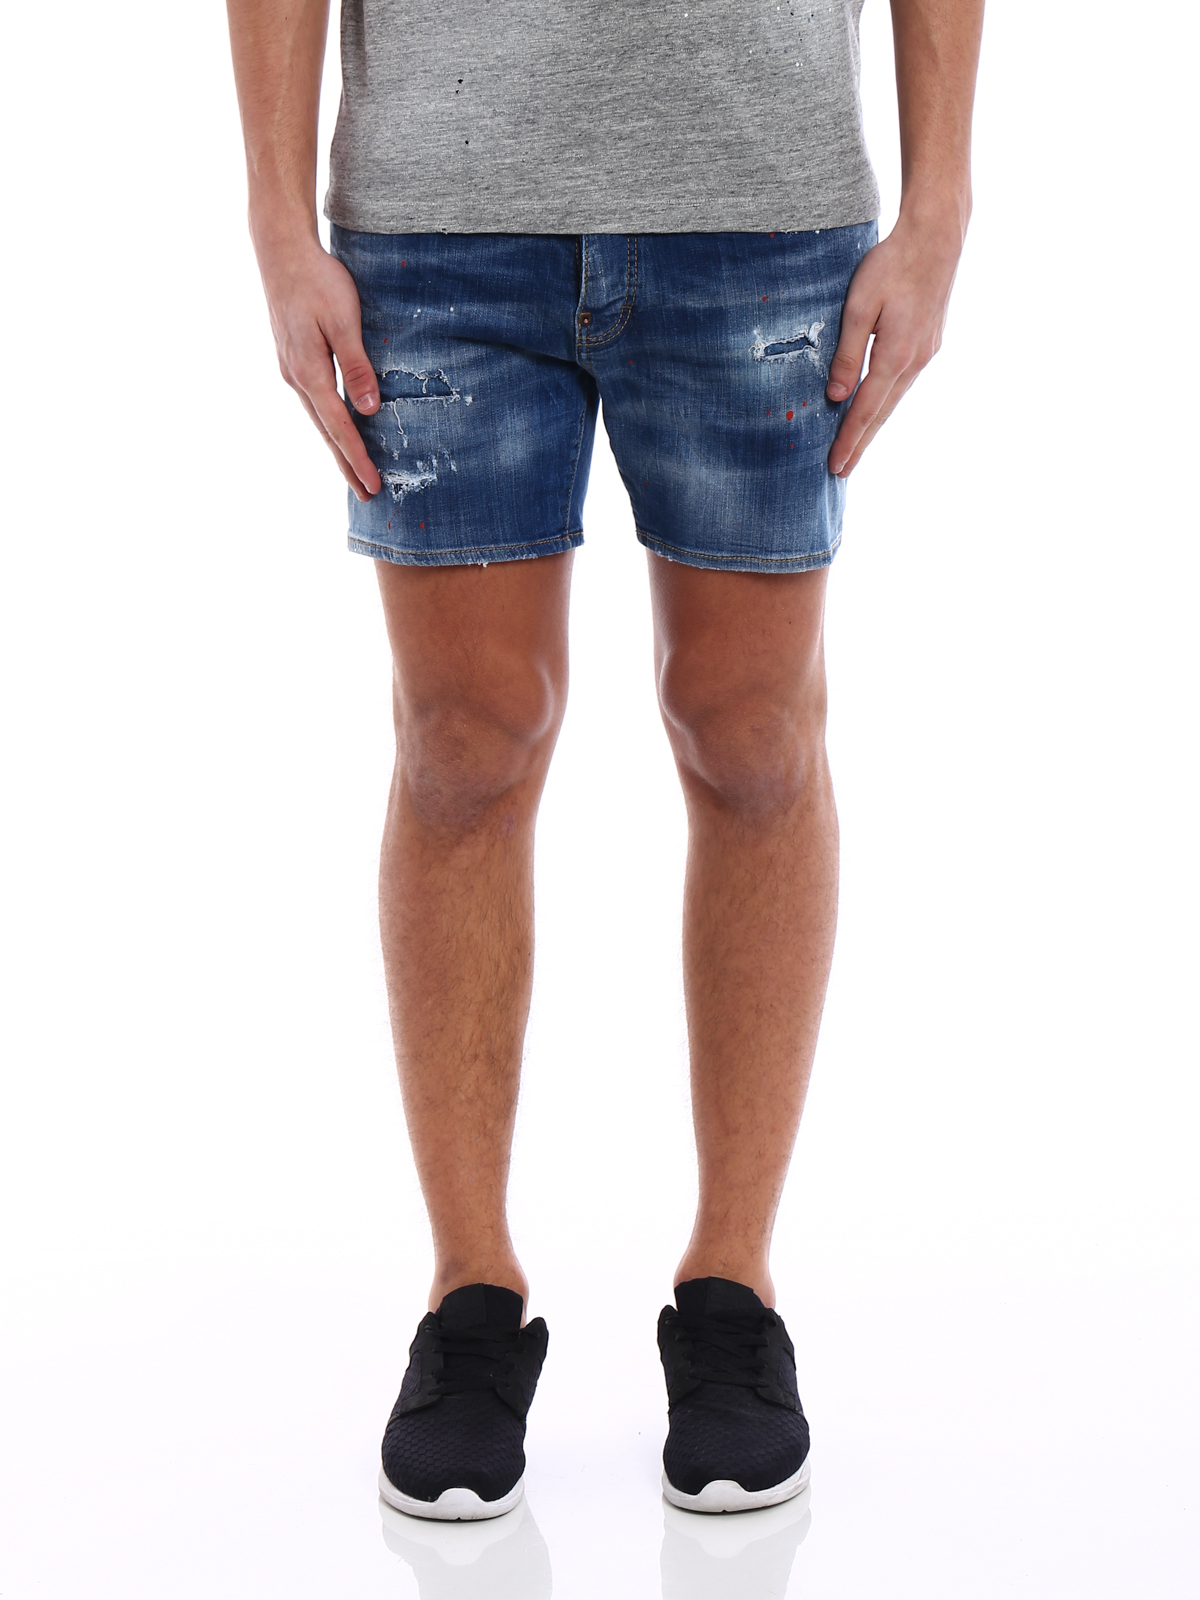 used denim shorts